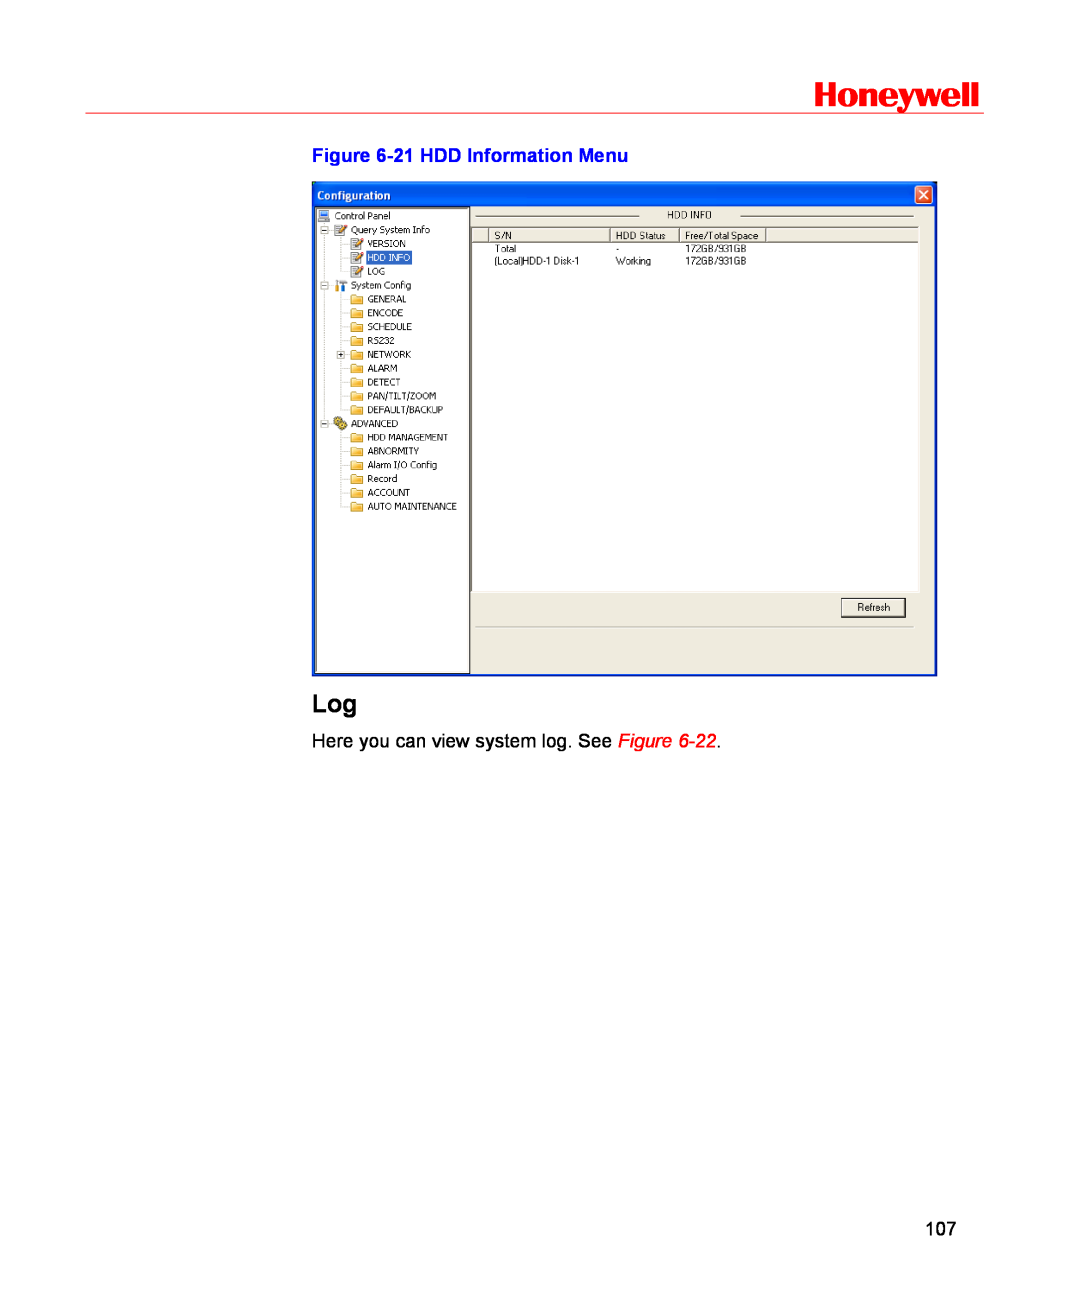 Honeywell HSVR-16, HSVR-04 user manual Honeywell, 21 HDD Information Menu 